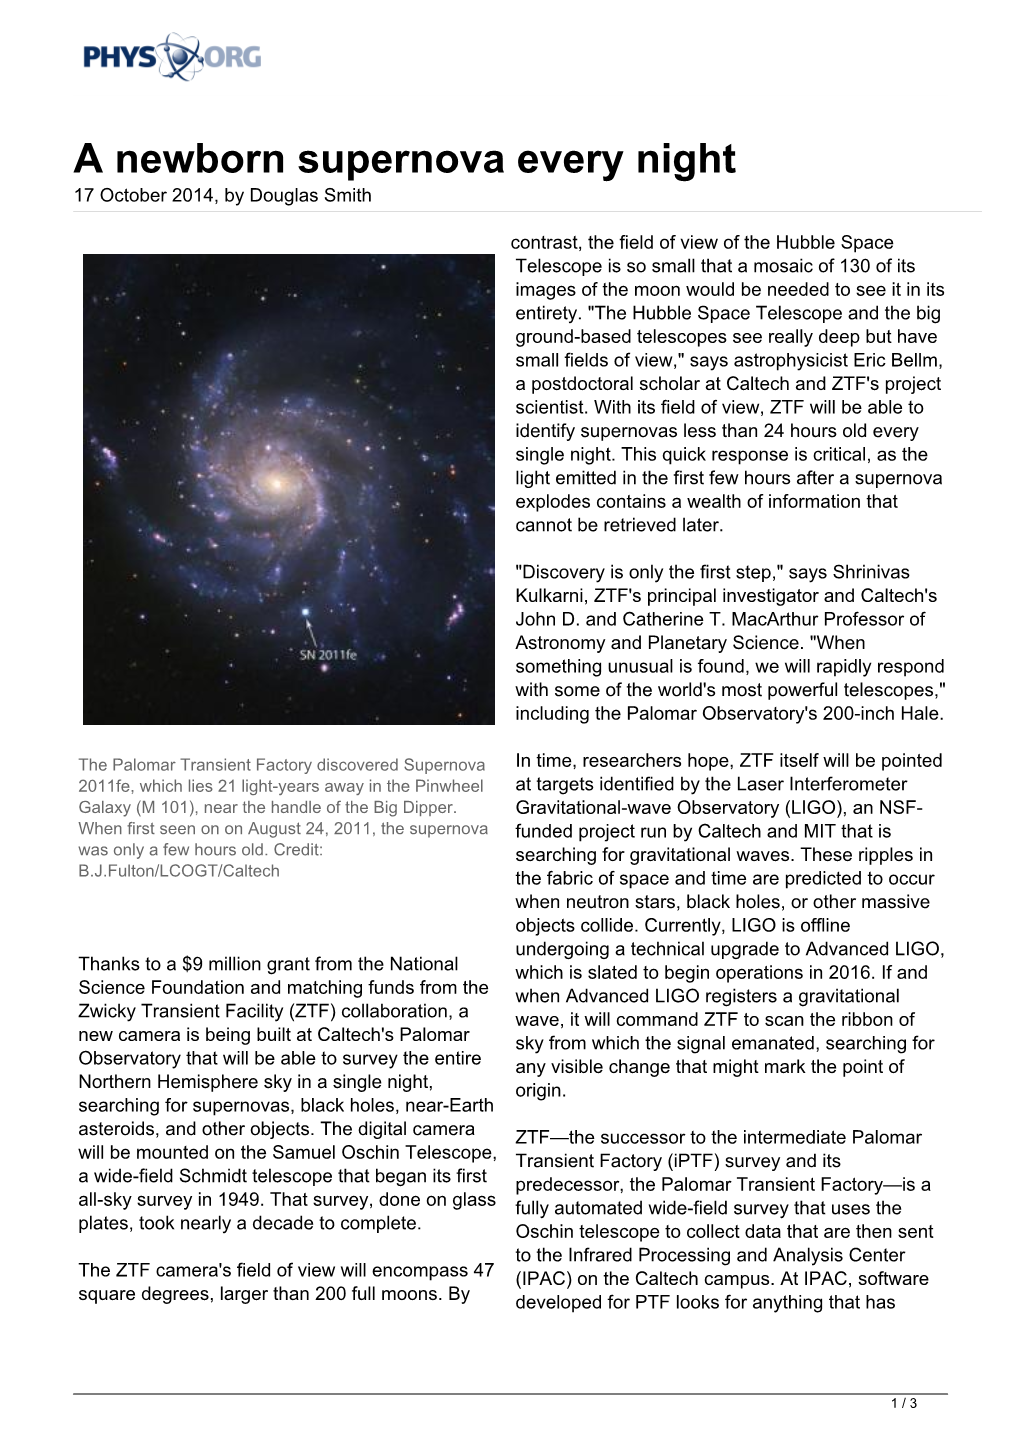 A Newborn Supernova Every Night 17 October 2014, by Douglas Smith